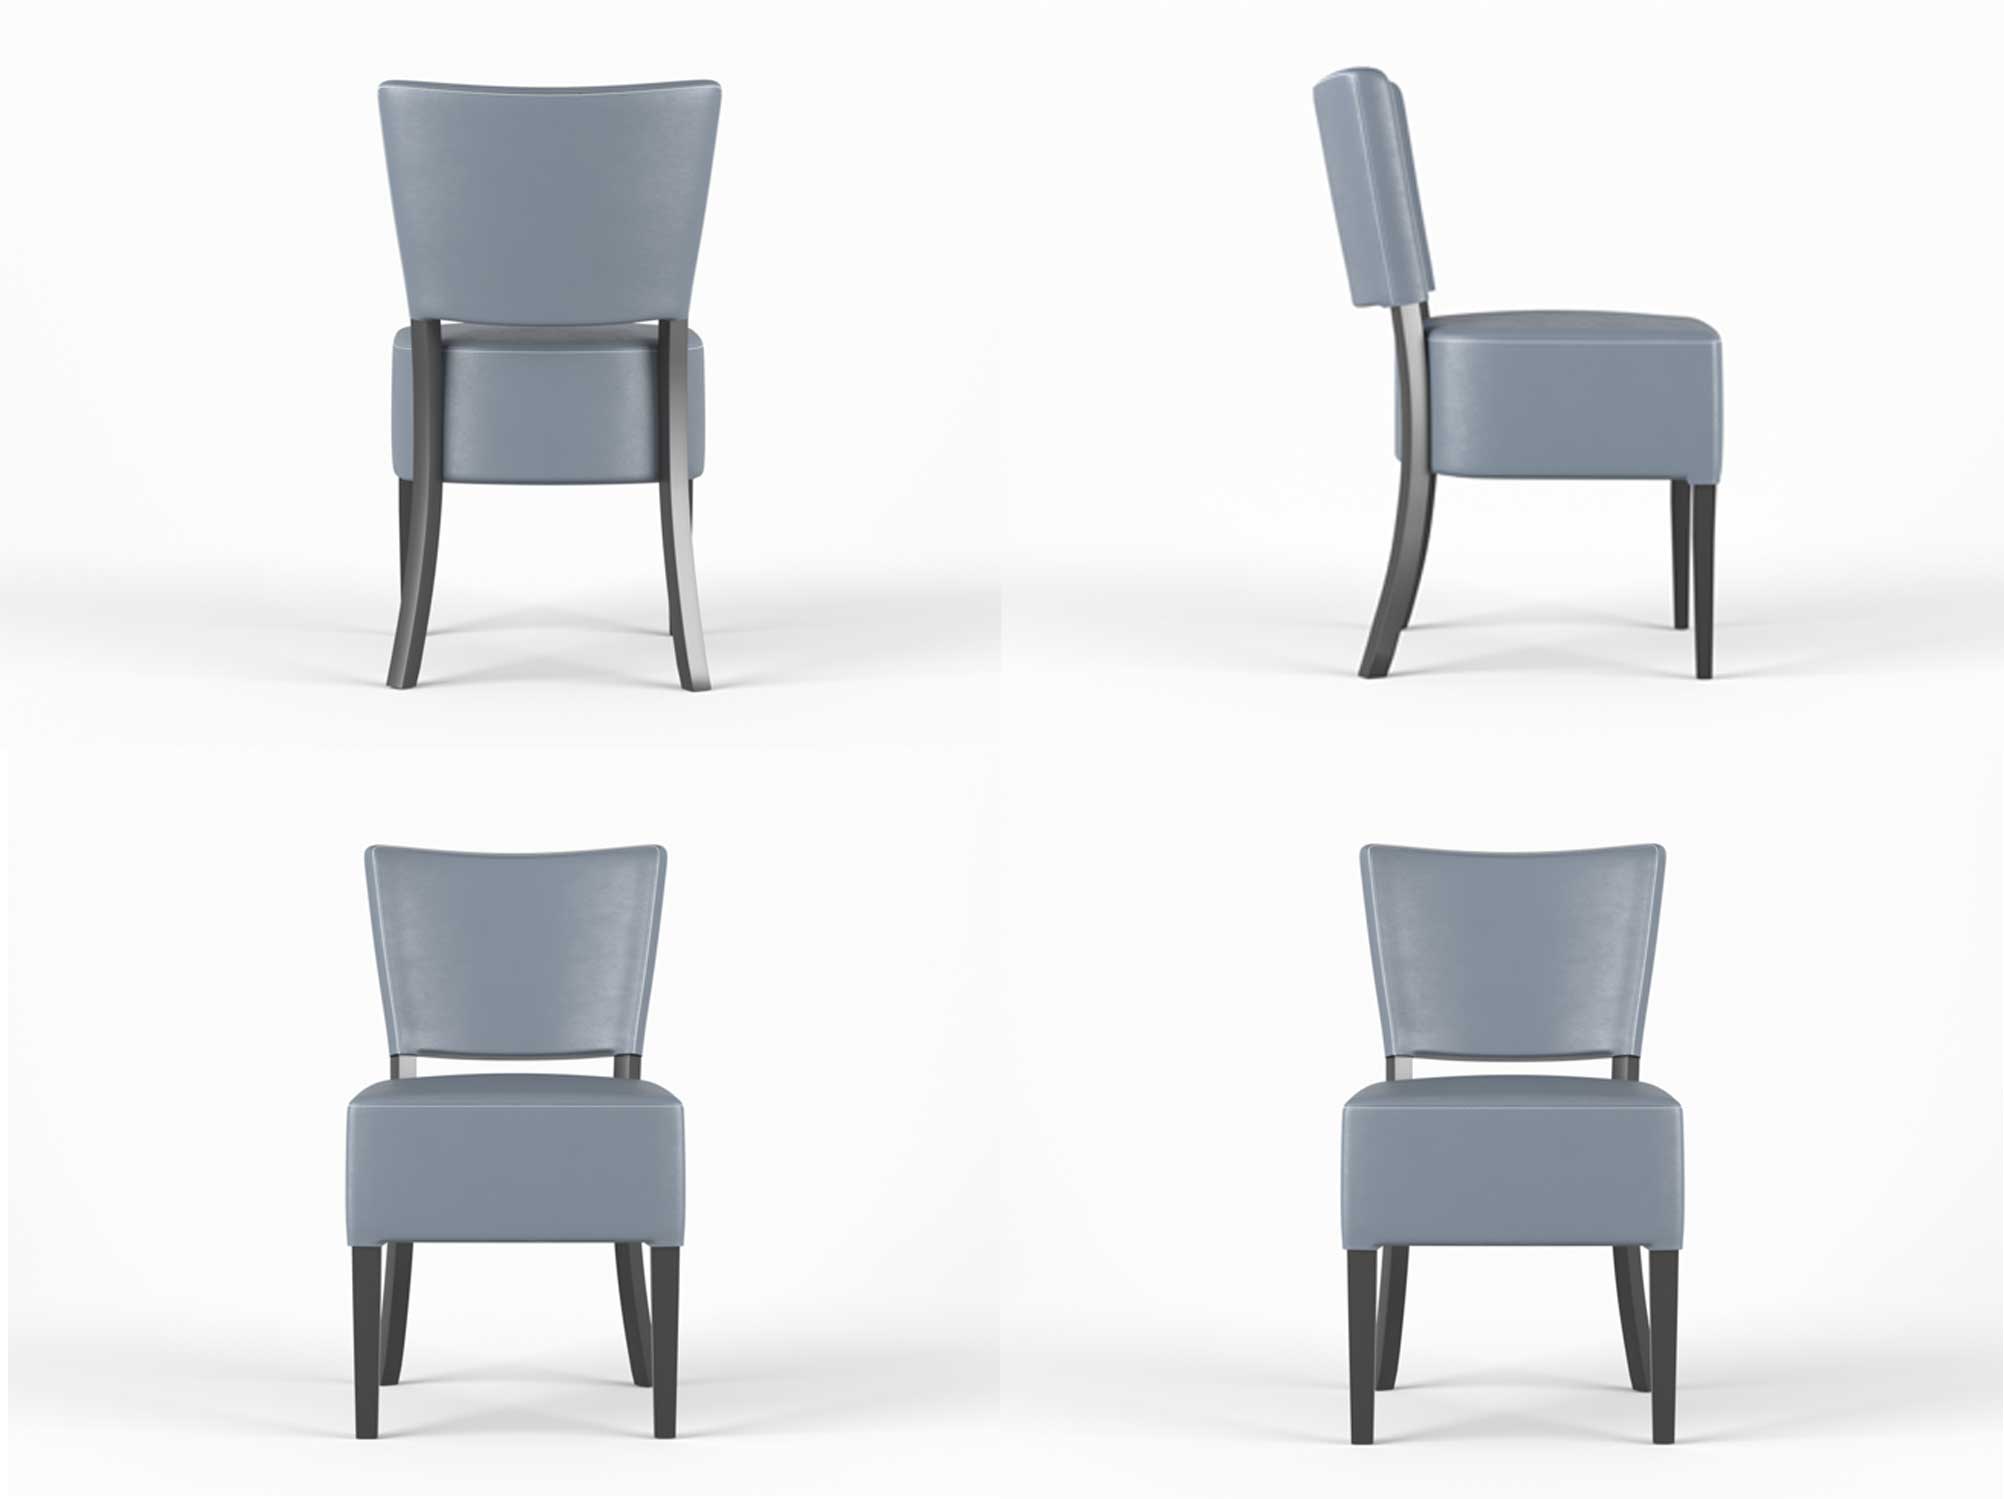 3D rendering of modern minimalist chair design"